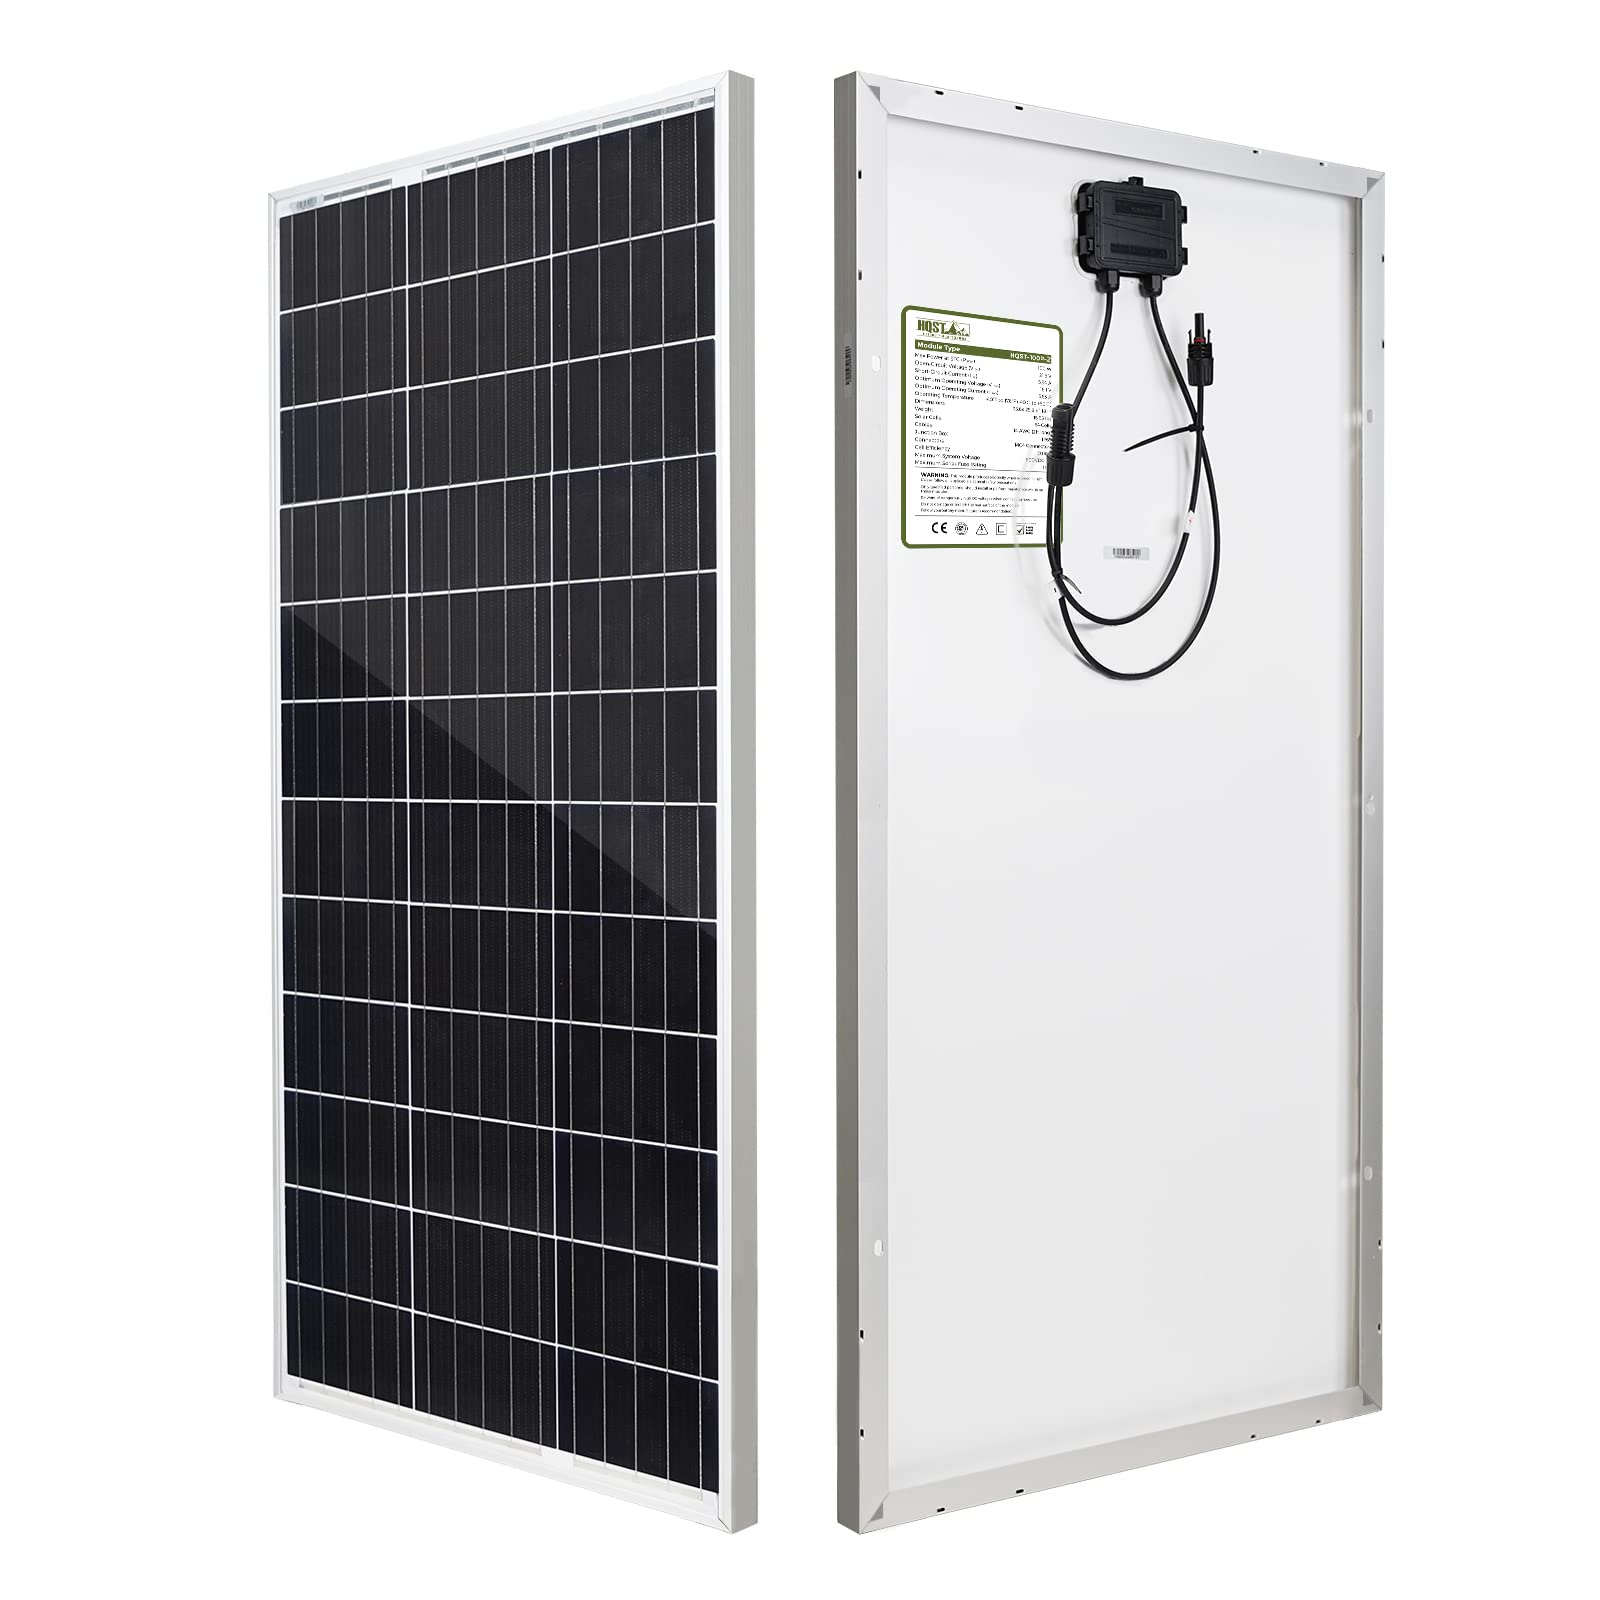 HQST 100 Watt 12V Monocrystalline Solar Panel with Solar $74.49 at Amazon